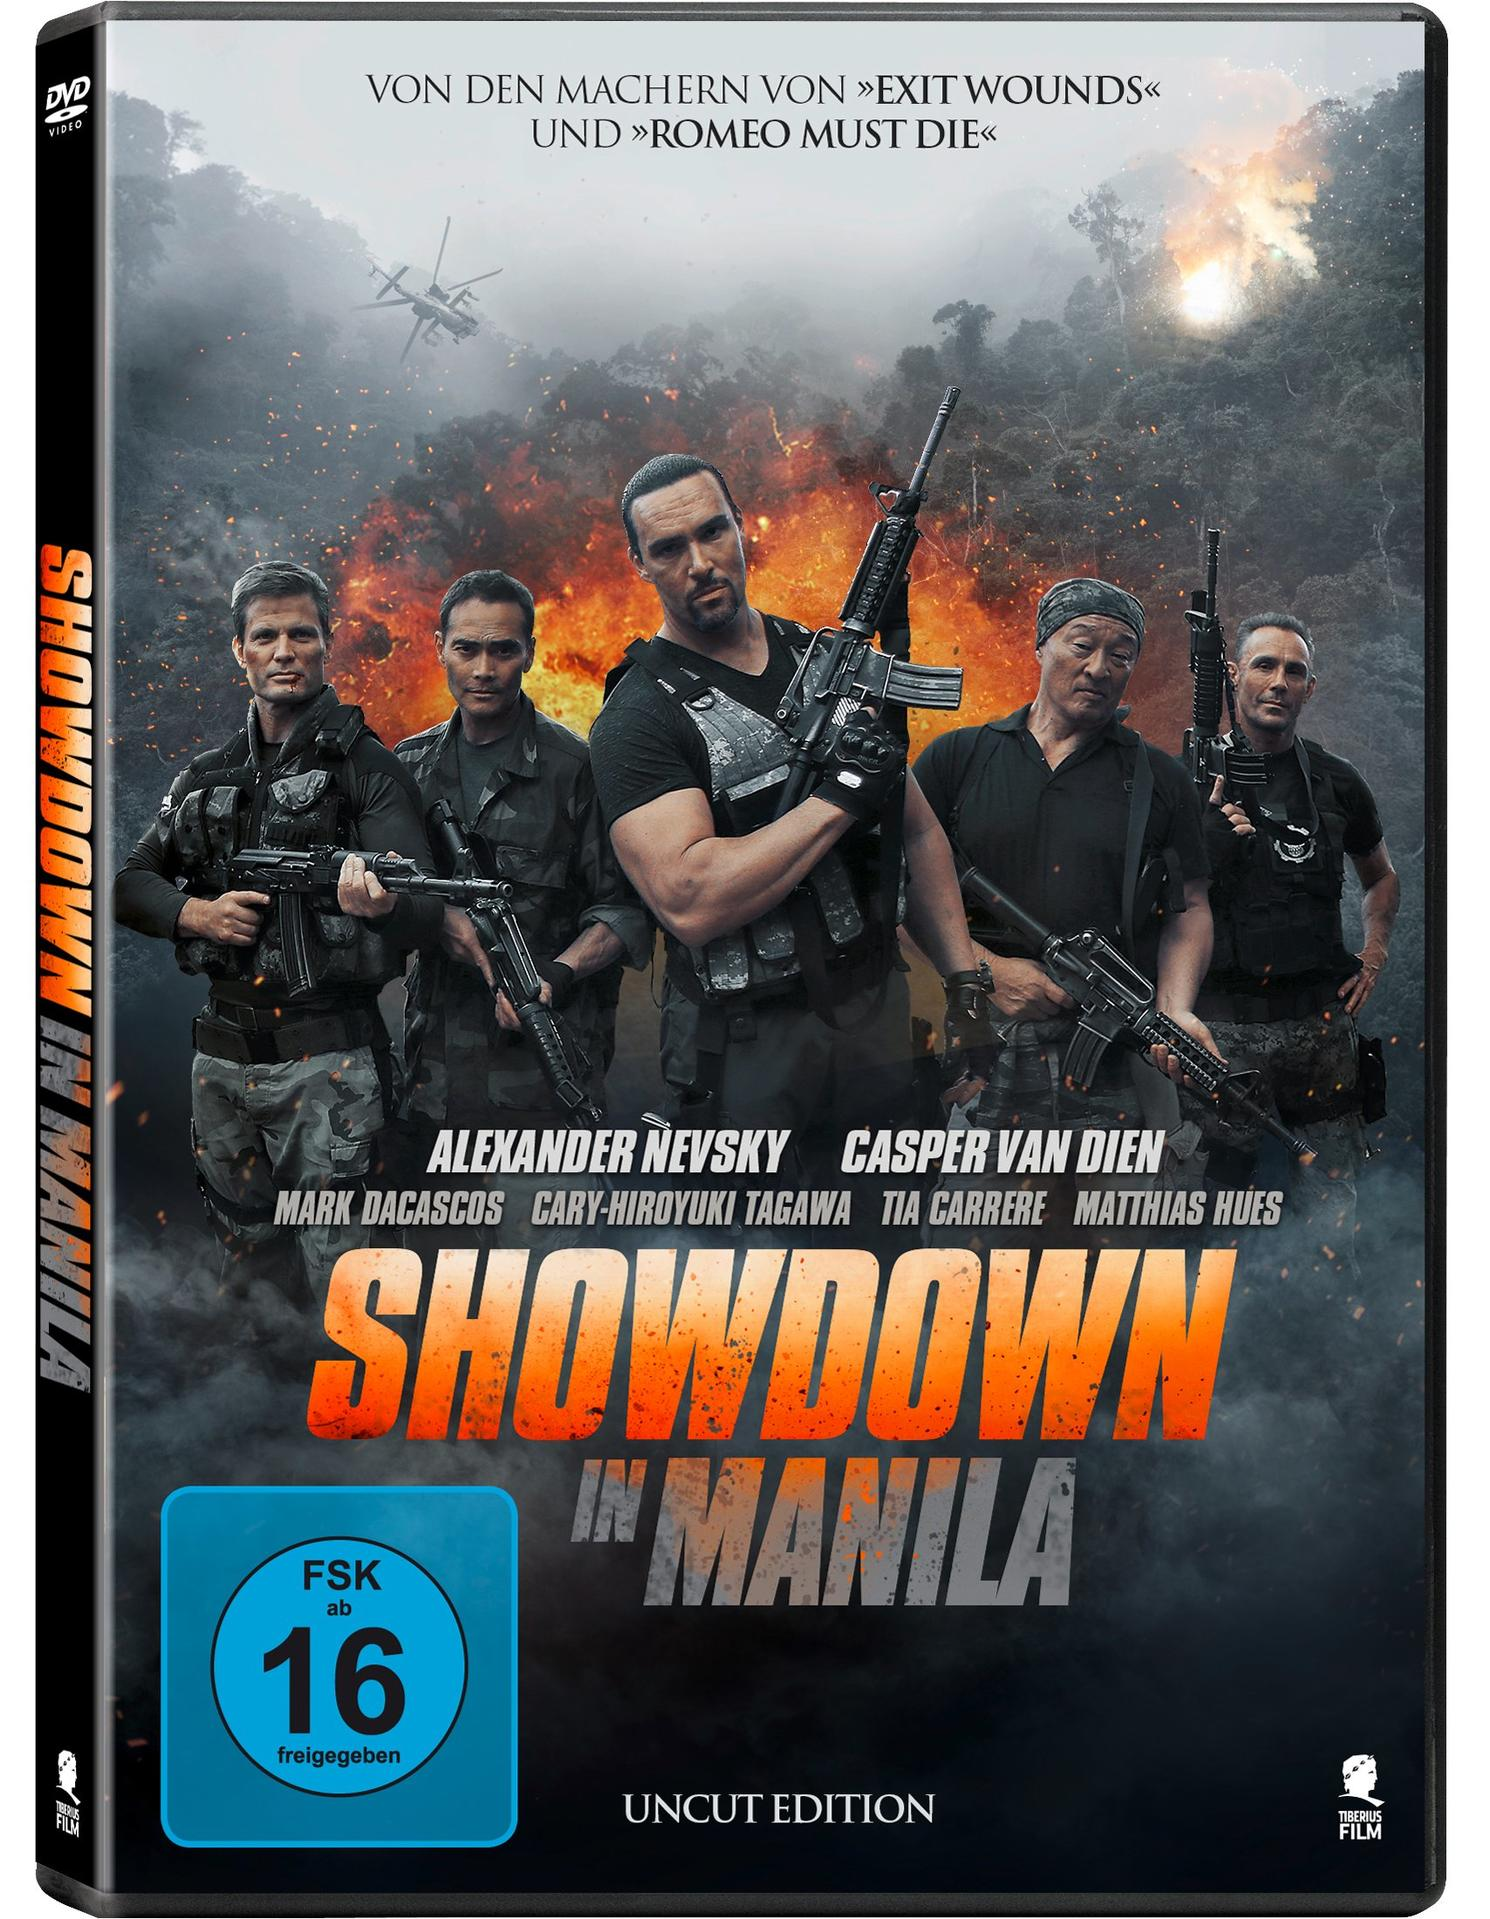 SHOWDOWN IN DVD MANILA